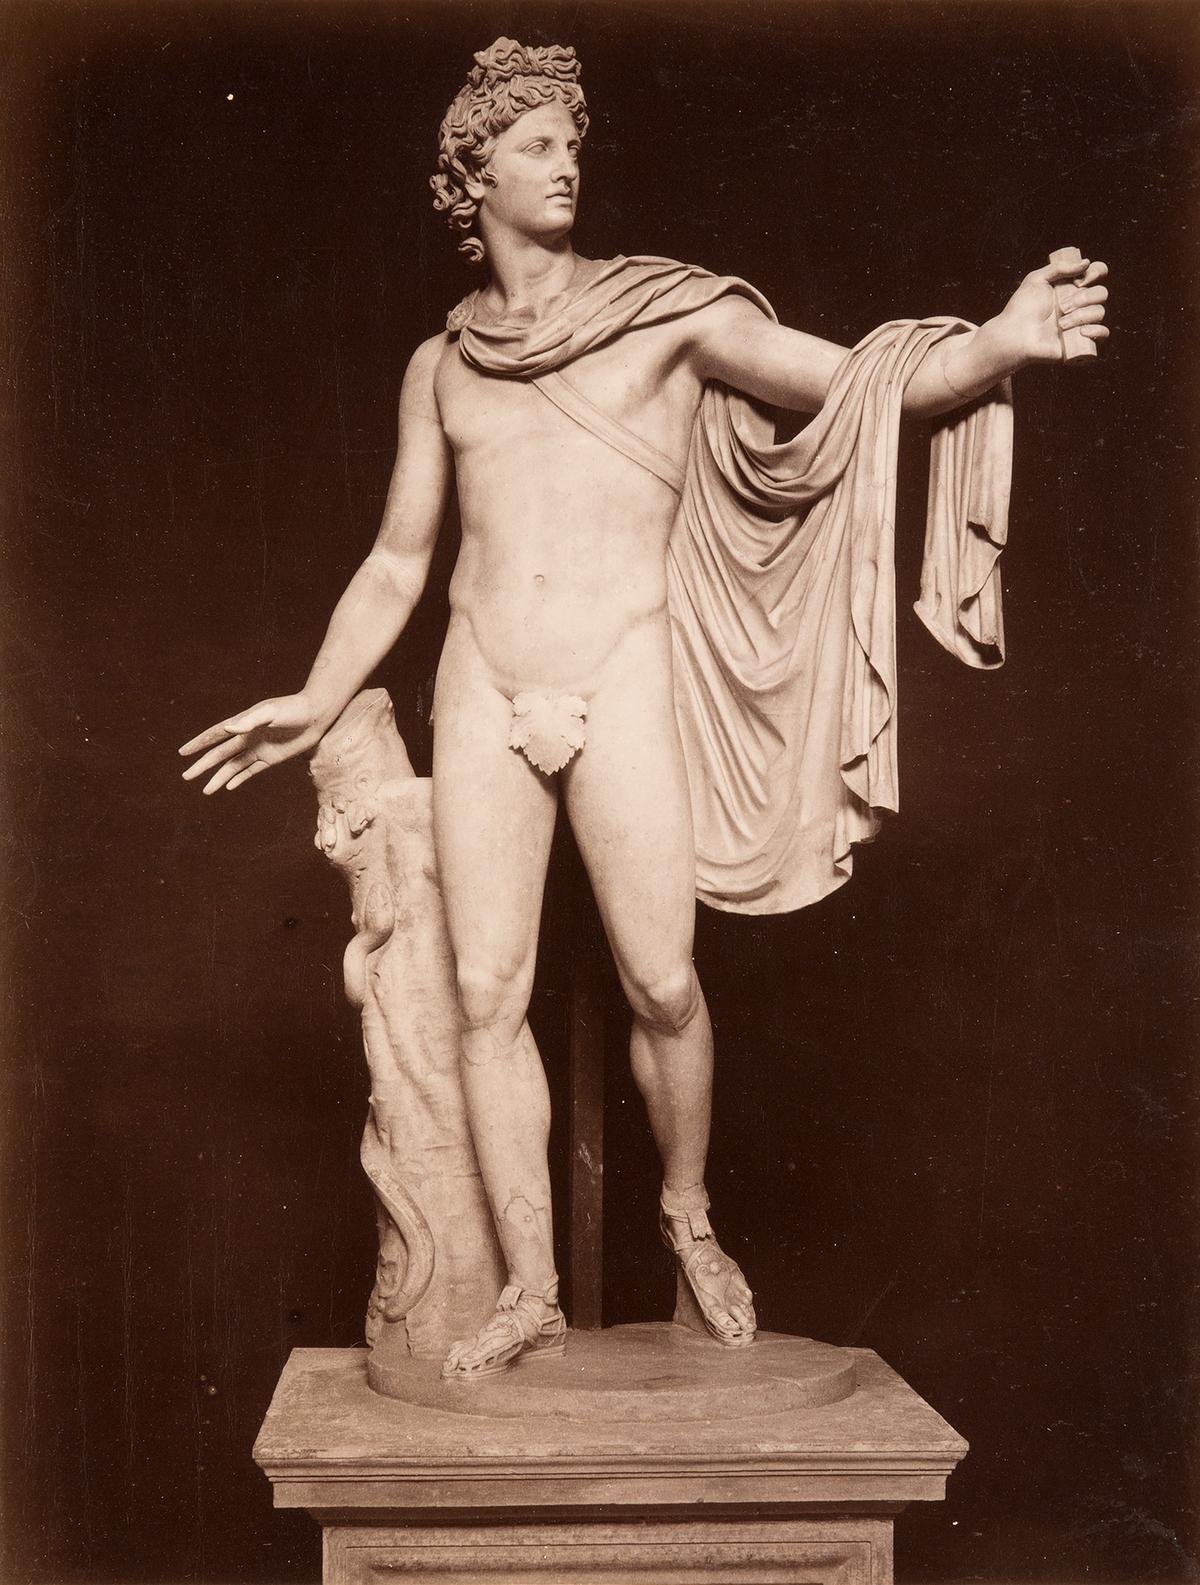 A photograph of the "Apollo Belvedere" in Rome, by <a title="Creator:Jenny Bergensten" href="https://commons.wikimedia.org/wiki/Creator:Jenny_Bergensten">Jenny Bergensten</a>, Hallwyl Museum, Sweden. (Public Domain)